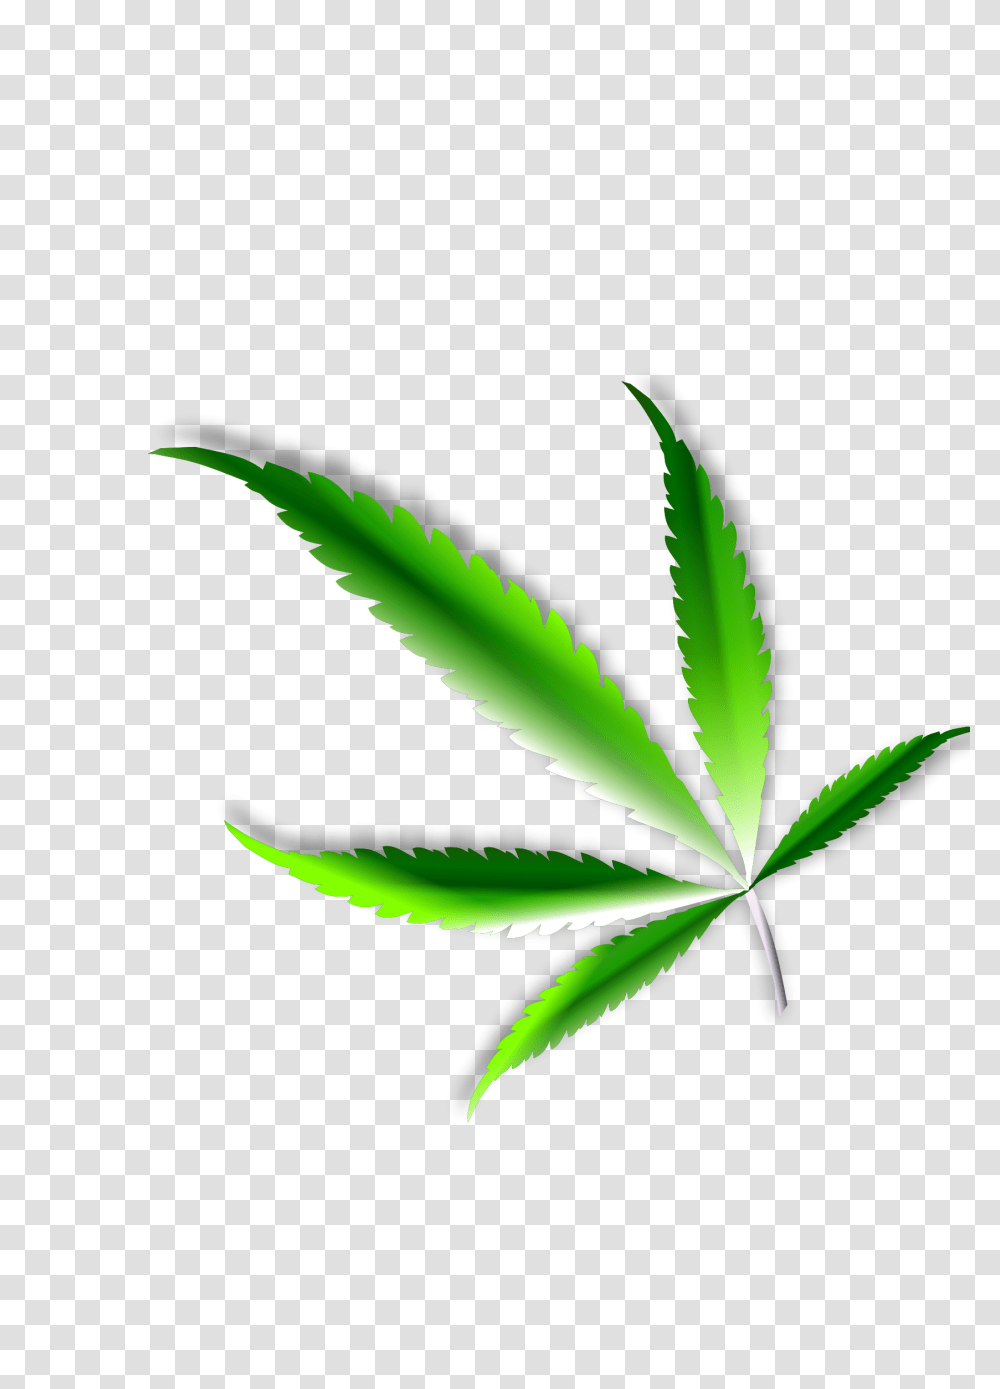 Weed Leaf Cannabis Leaf Transparency, Plant, Hemp Transparent Png